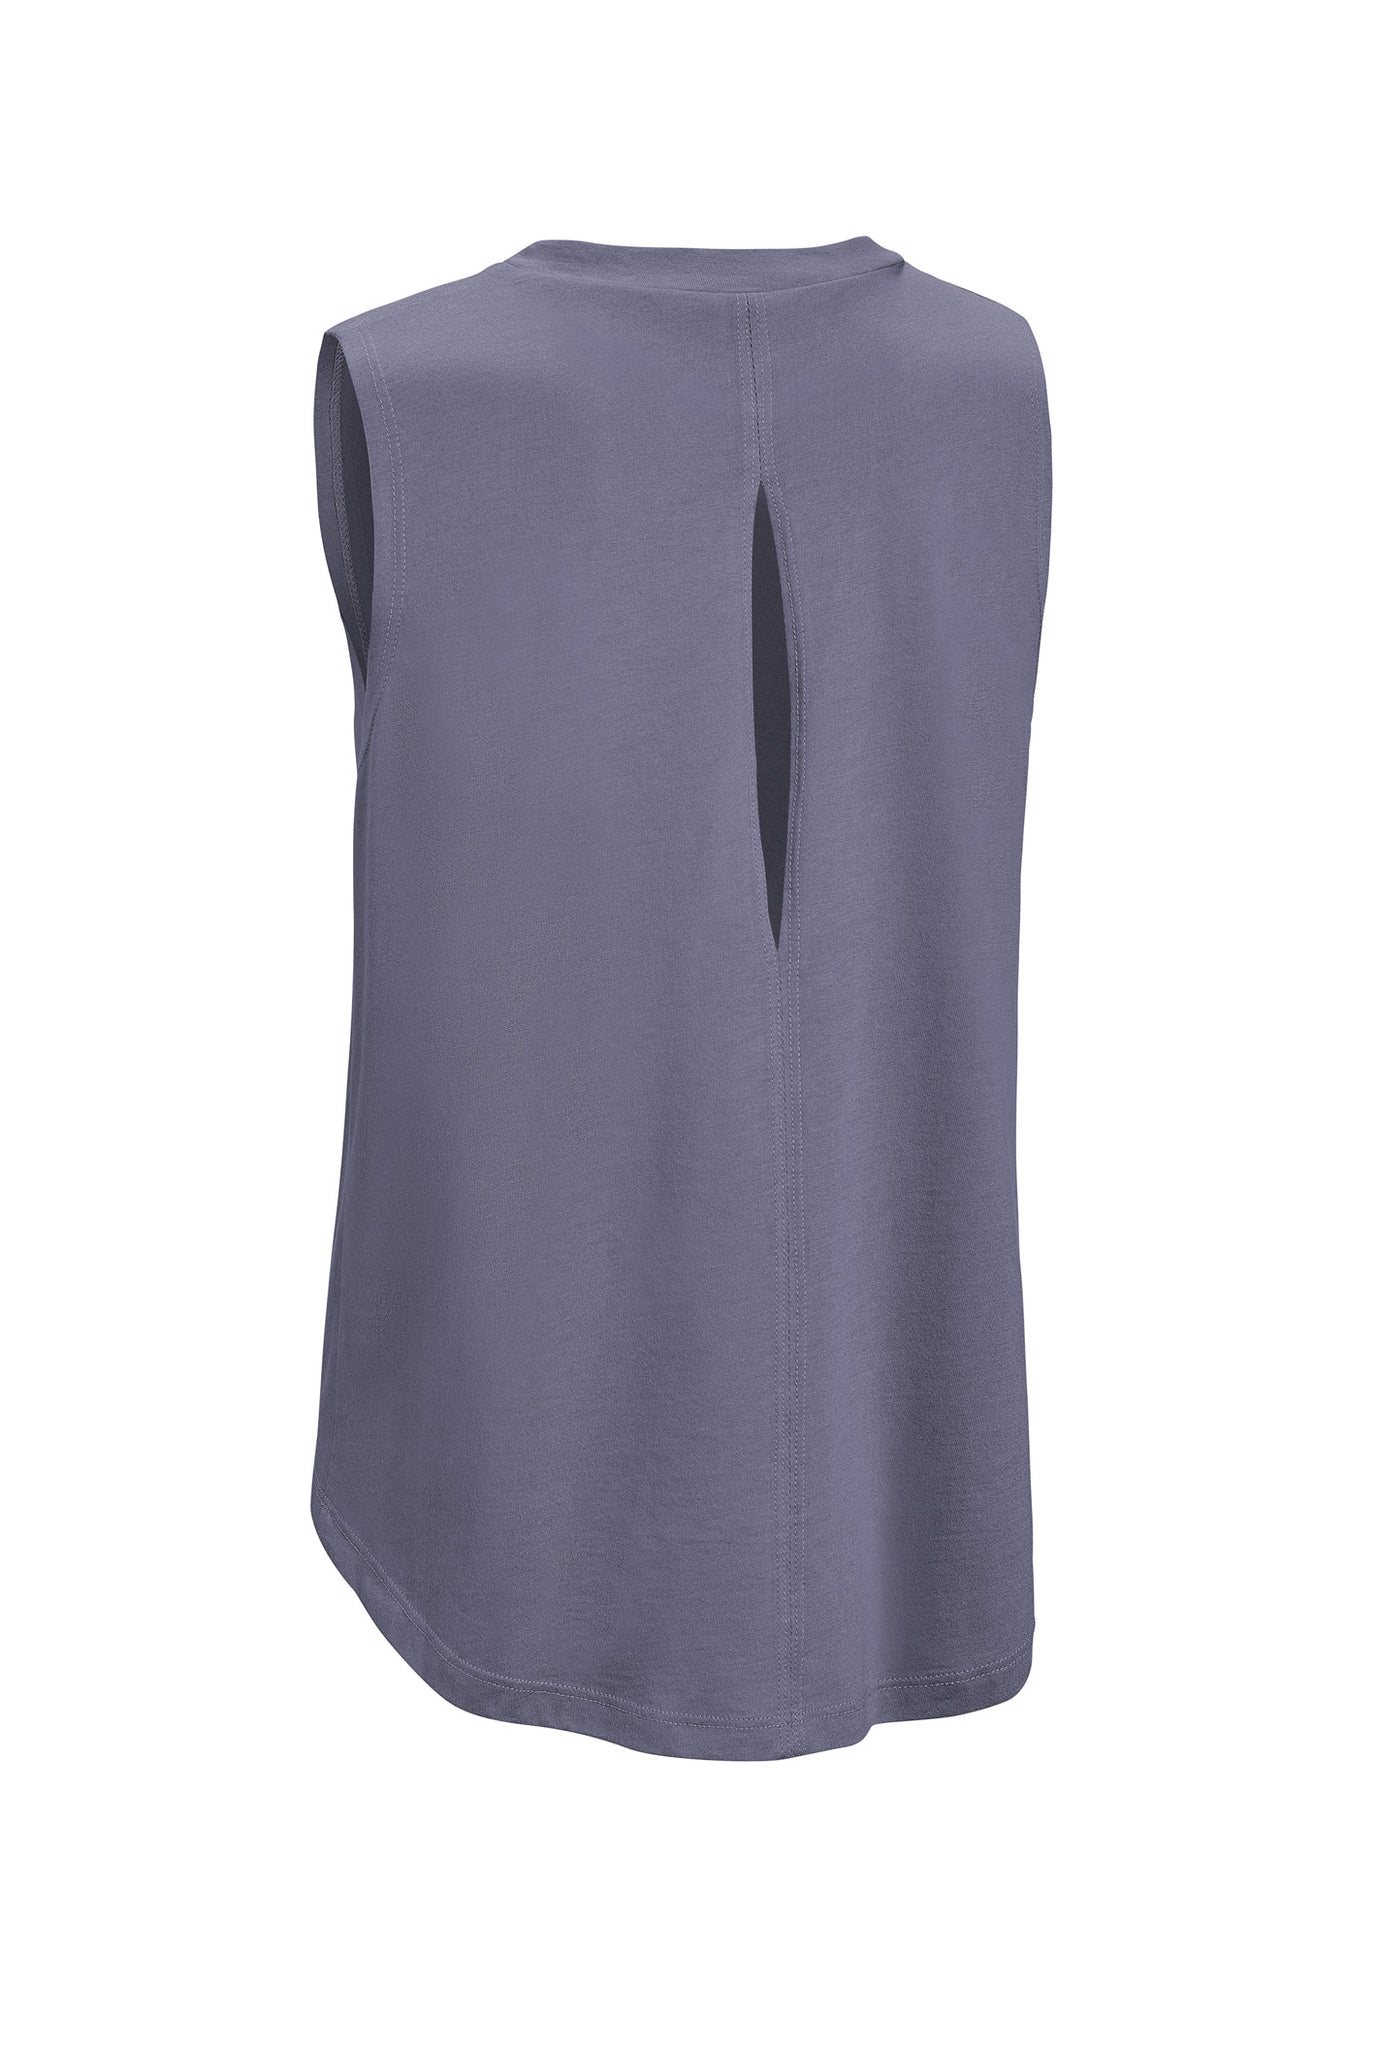 Expert Brand Wholesale Women's Sleeveless Eco-Friendly Hemp Cotton Fashion Muscle Tank Made In USA Graphite image 2#graphite